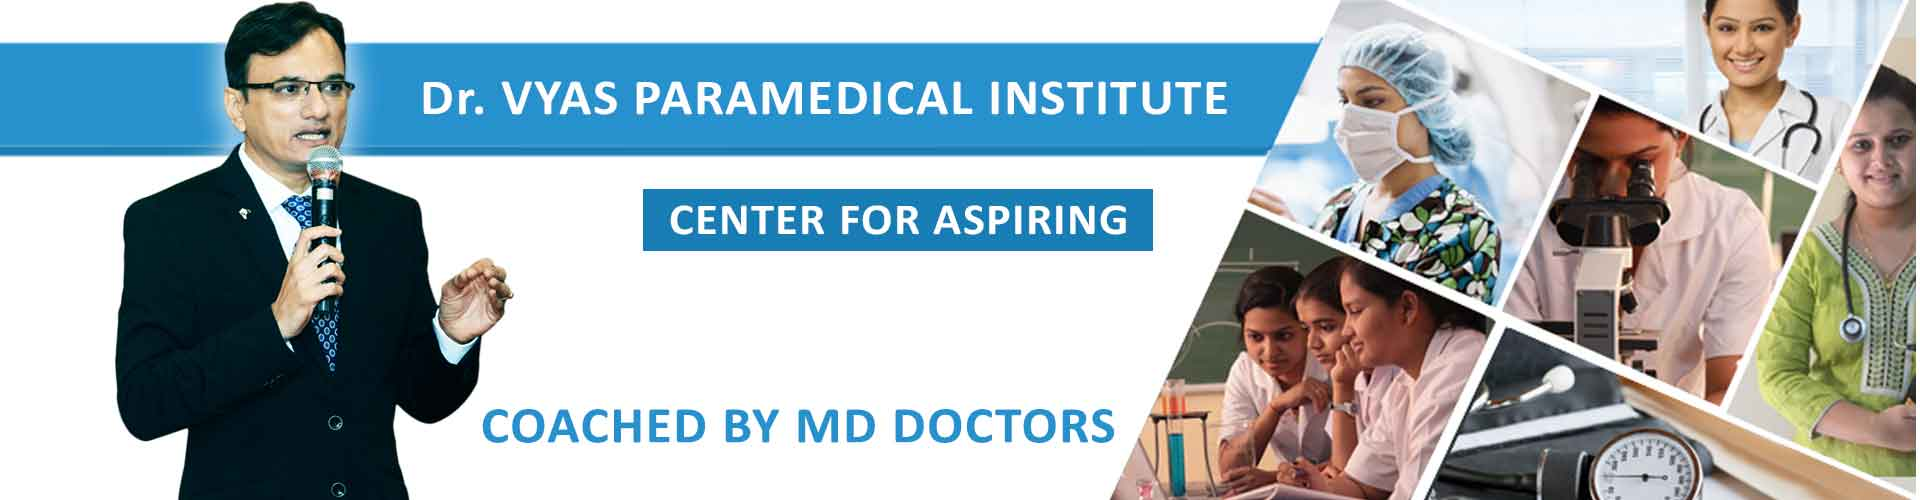 Dr Vyas Parameducal Institute